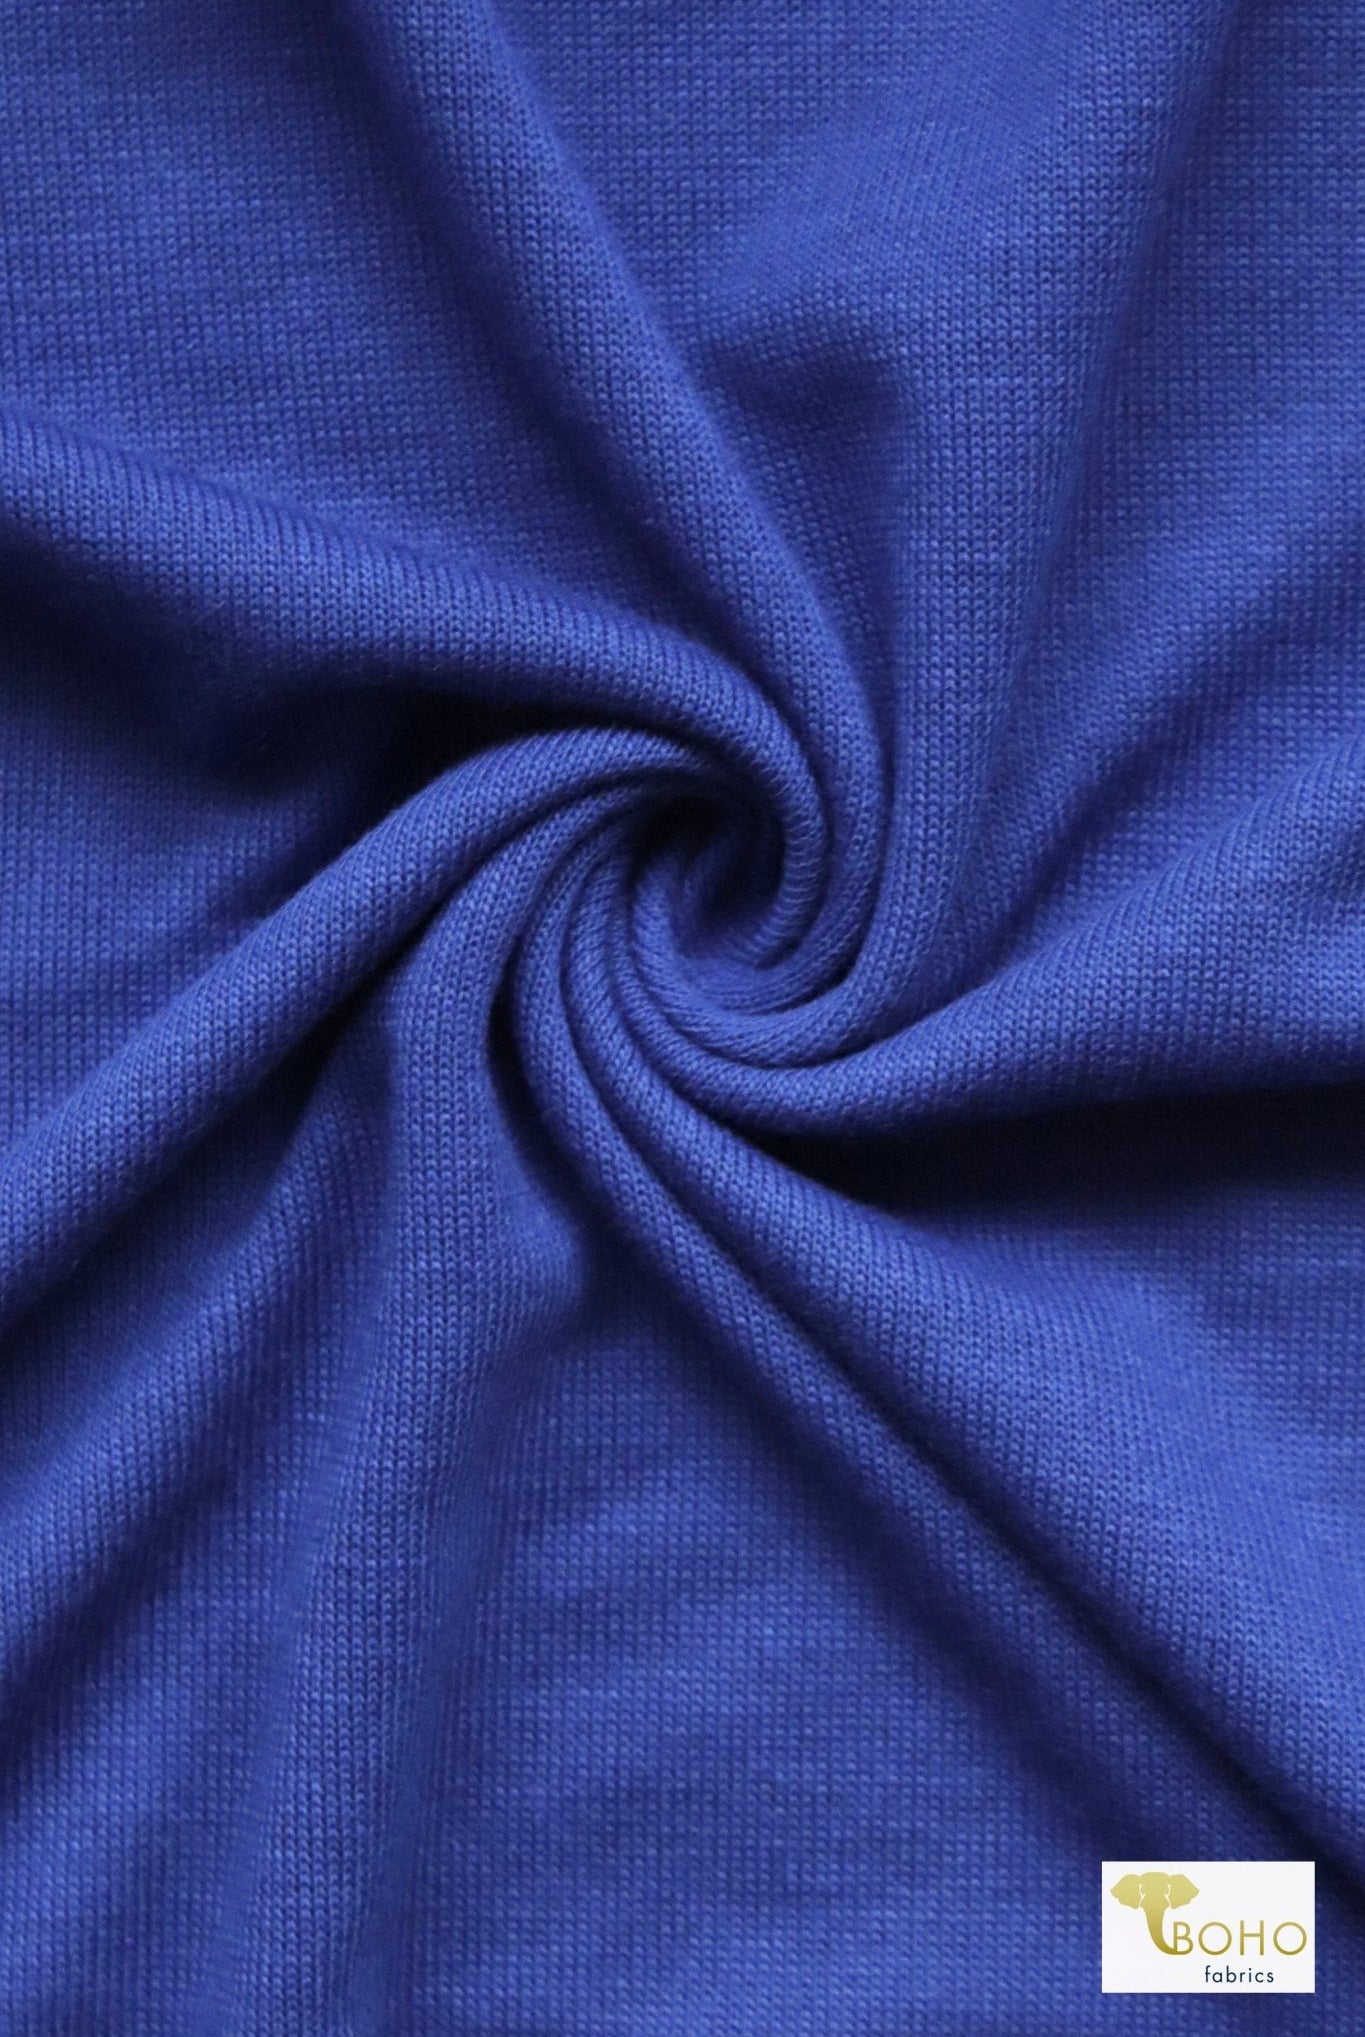 Periwinkle, Hacci Sweater Knit - Boho Fabrics